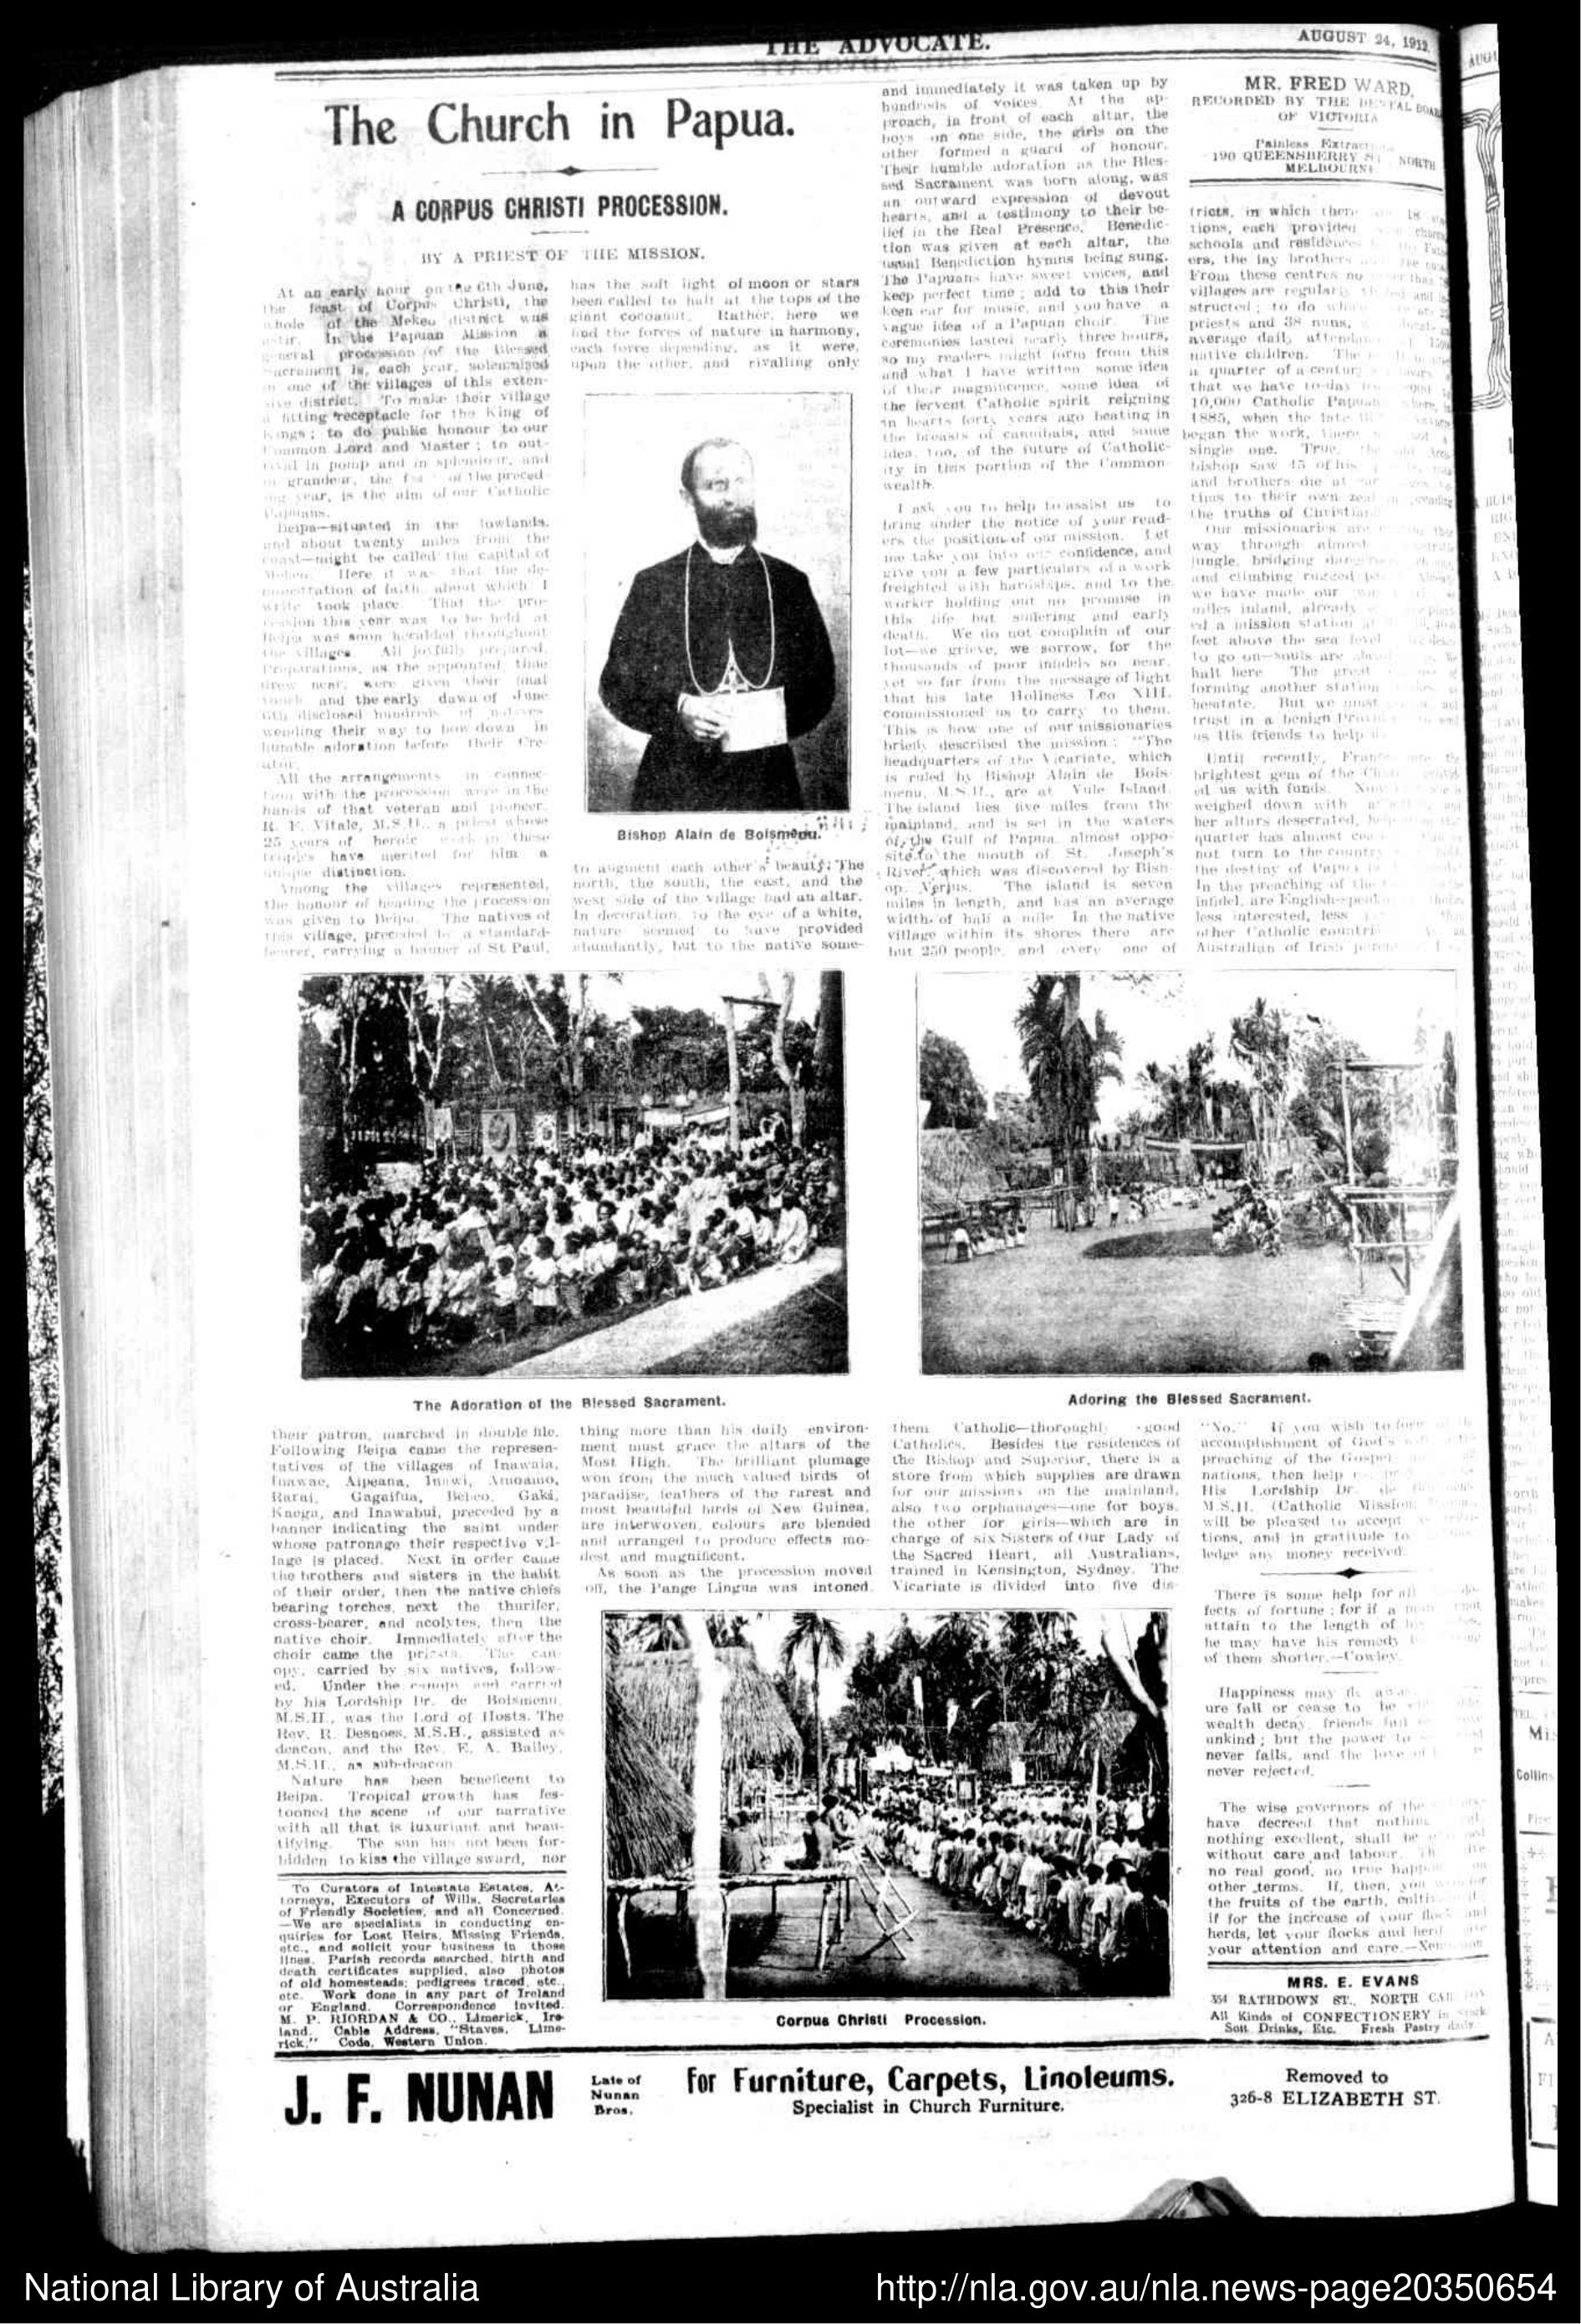 PAPUA NEW GUINEA. The Church in Papua. The Advocate (Melbourne, Vic.). August 24, 1912. https://trove.nla.gov.au/newspaper/article/170953115